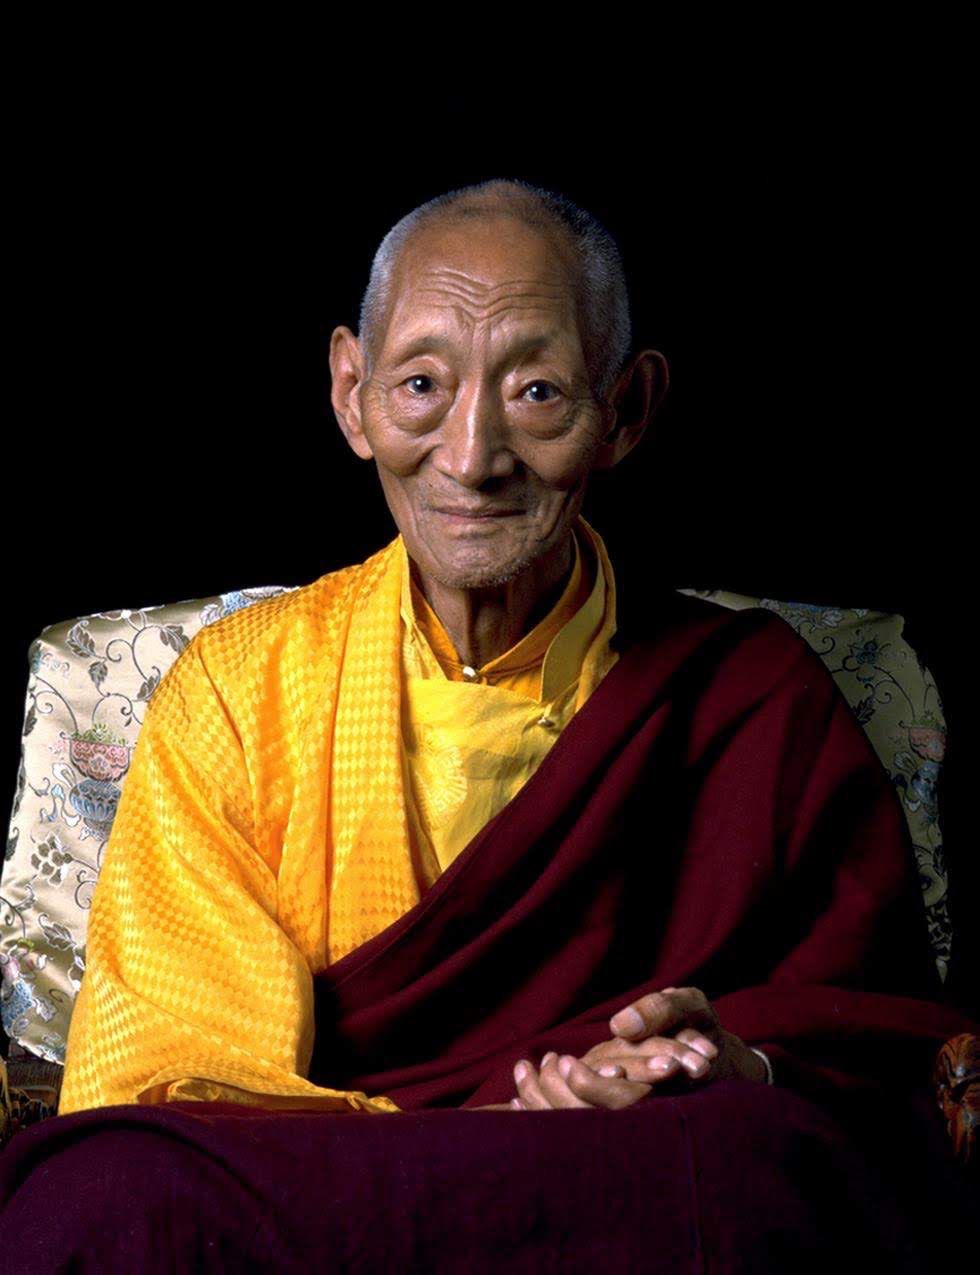 His Eminence Dorje Chang Kalu Rinpoche